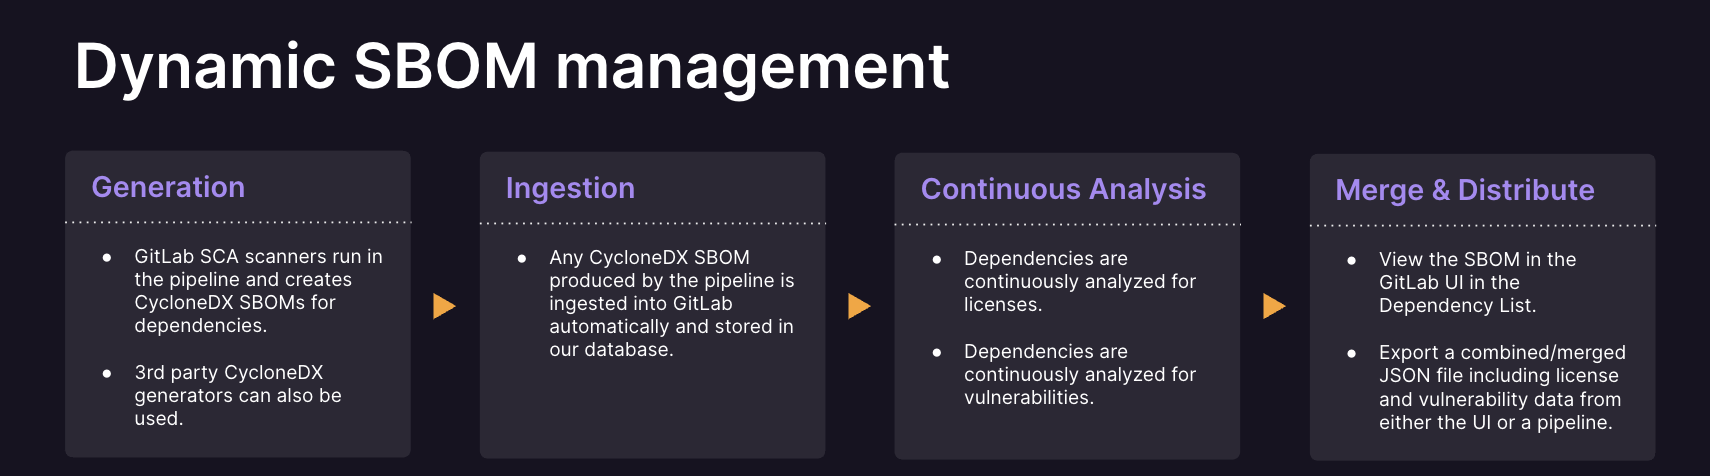 Dynamic SBOM management